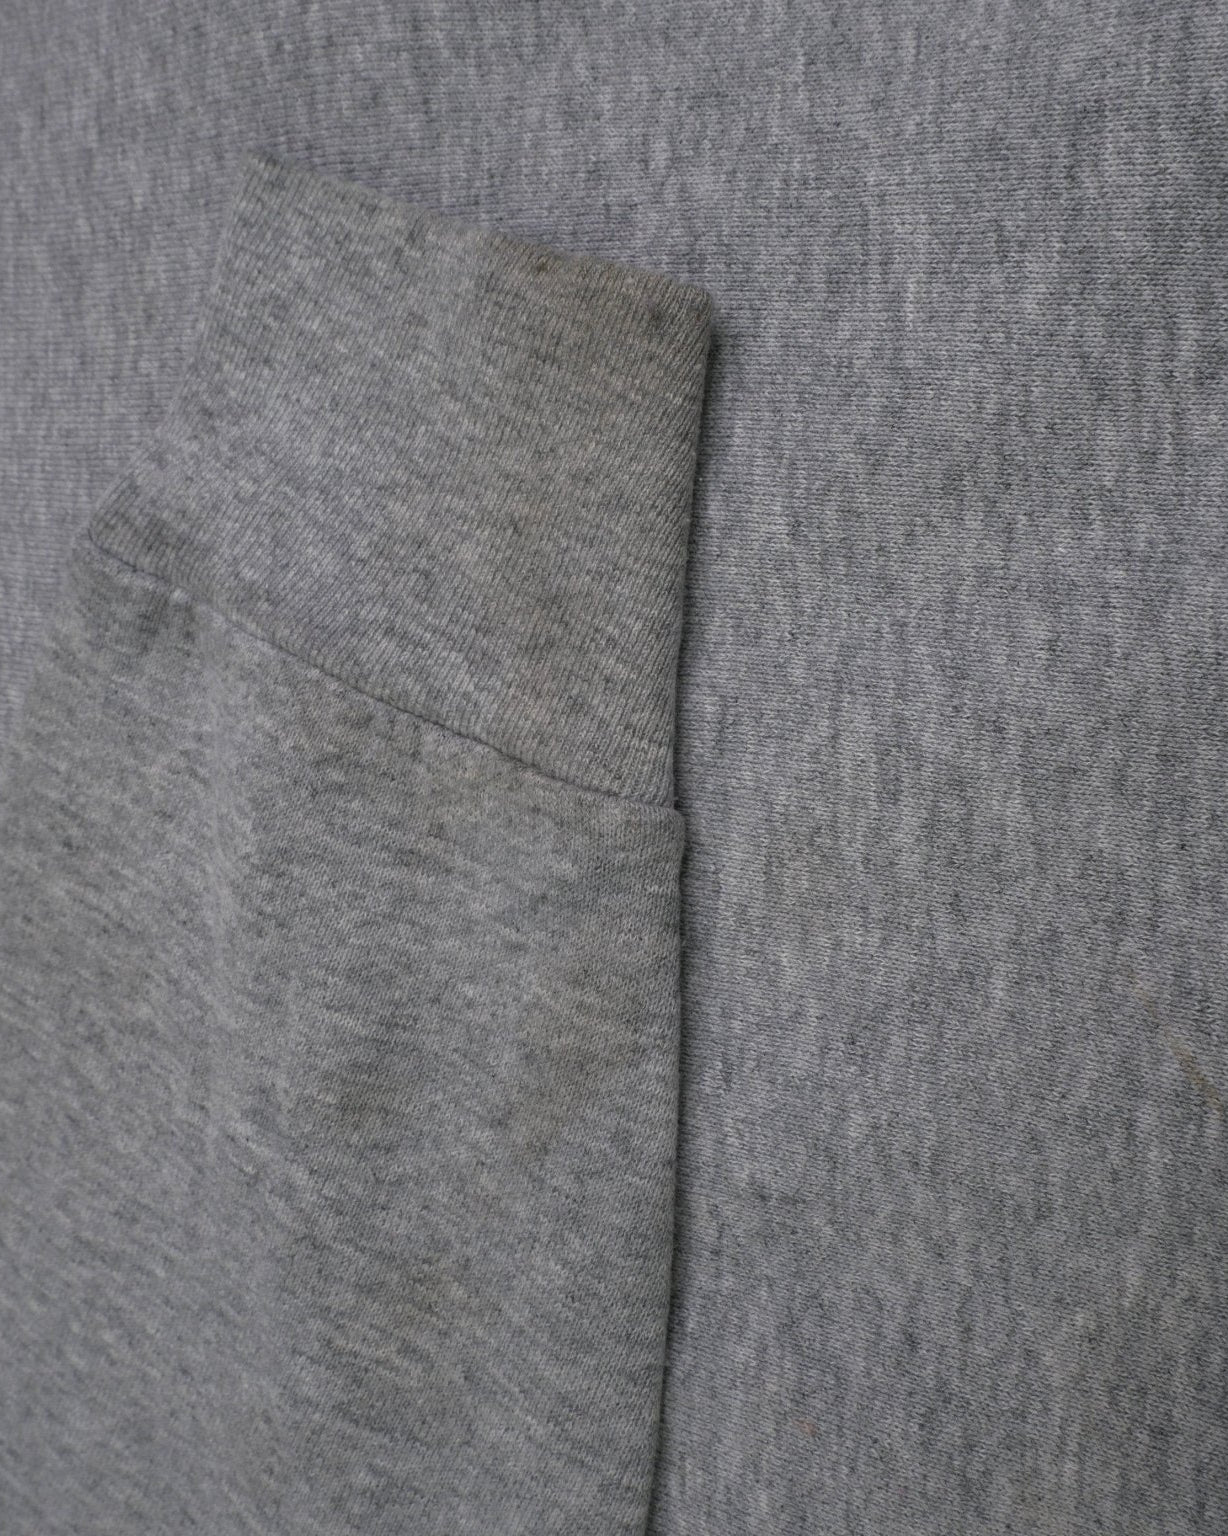 2000 printed Logo grey cropped Sweater - Peeces